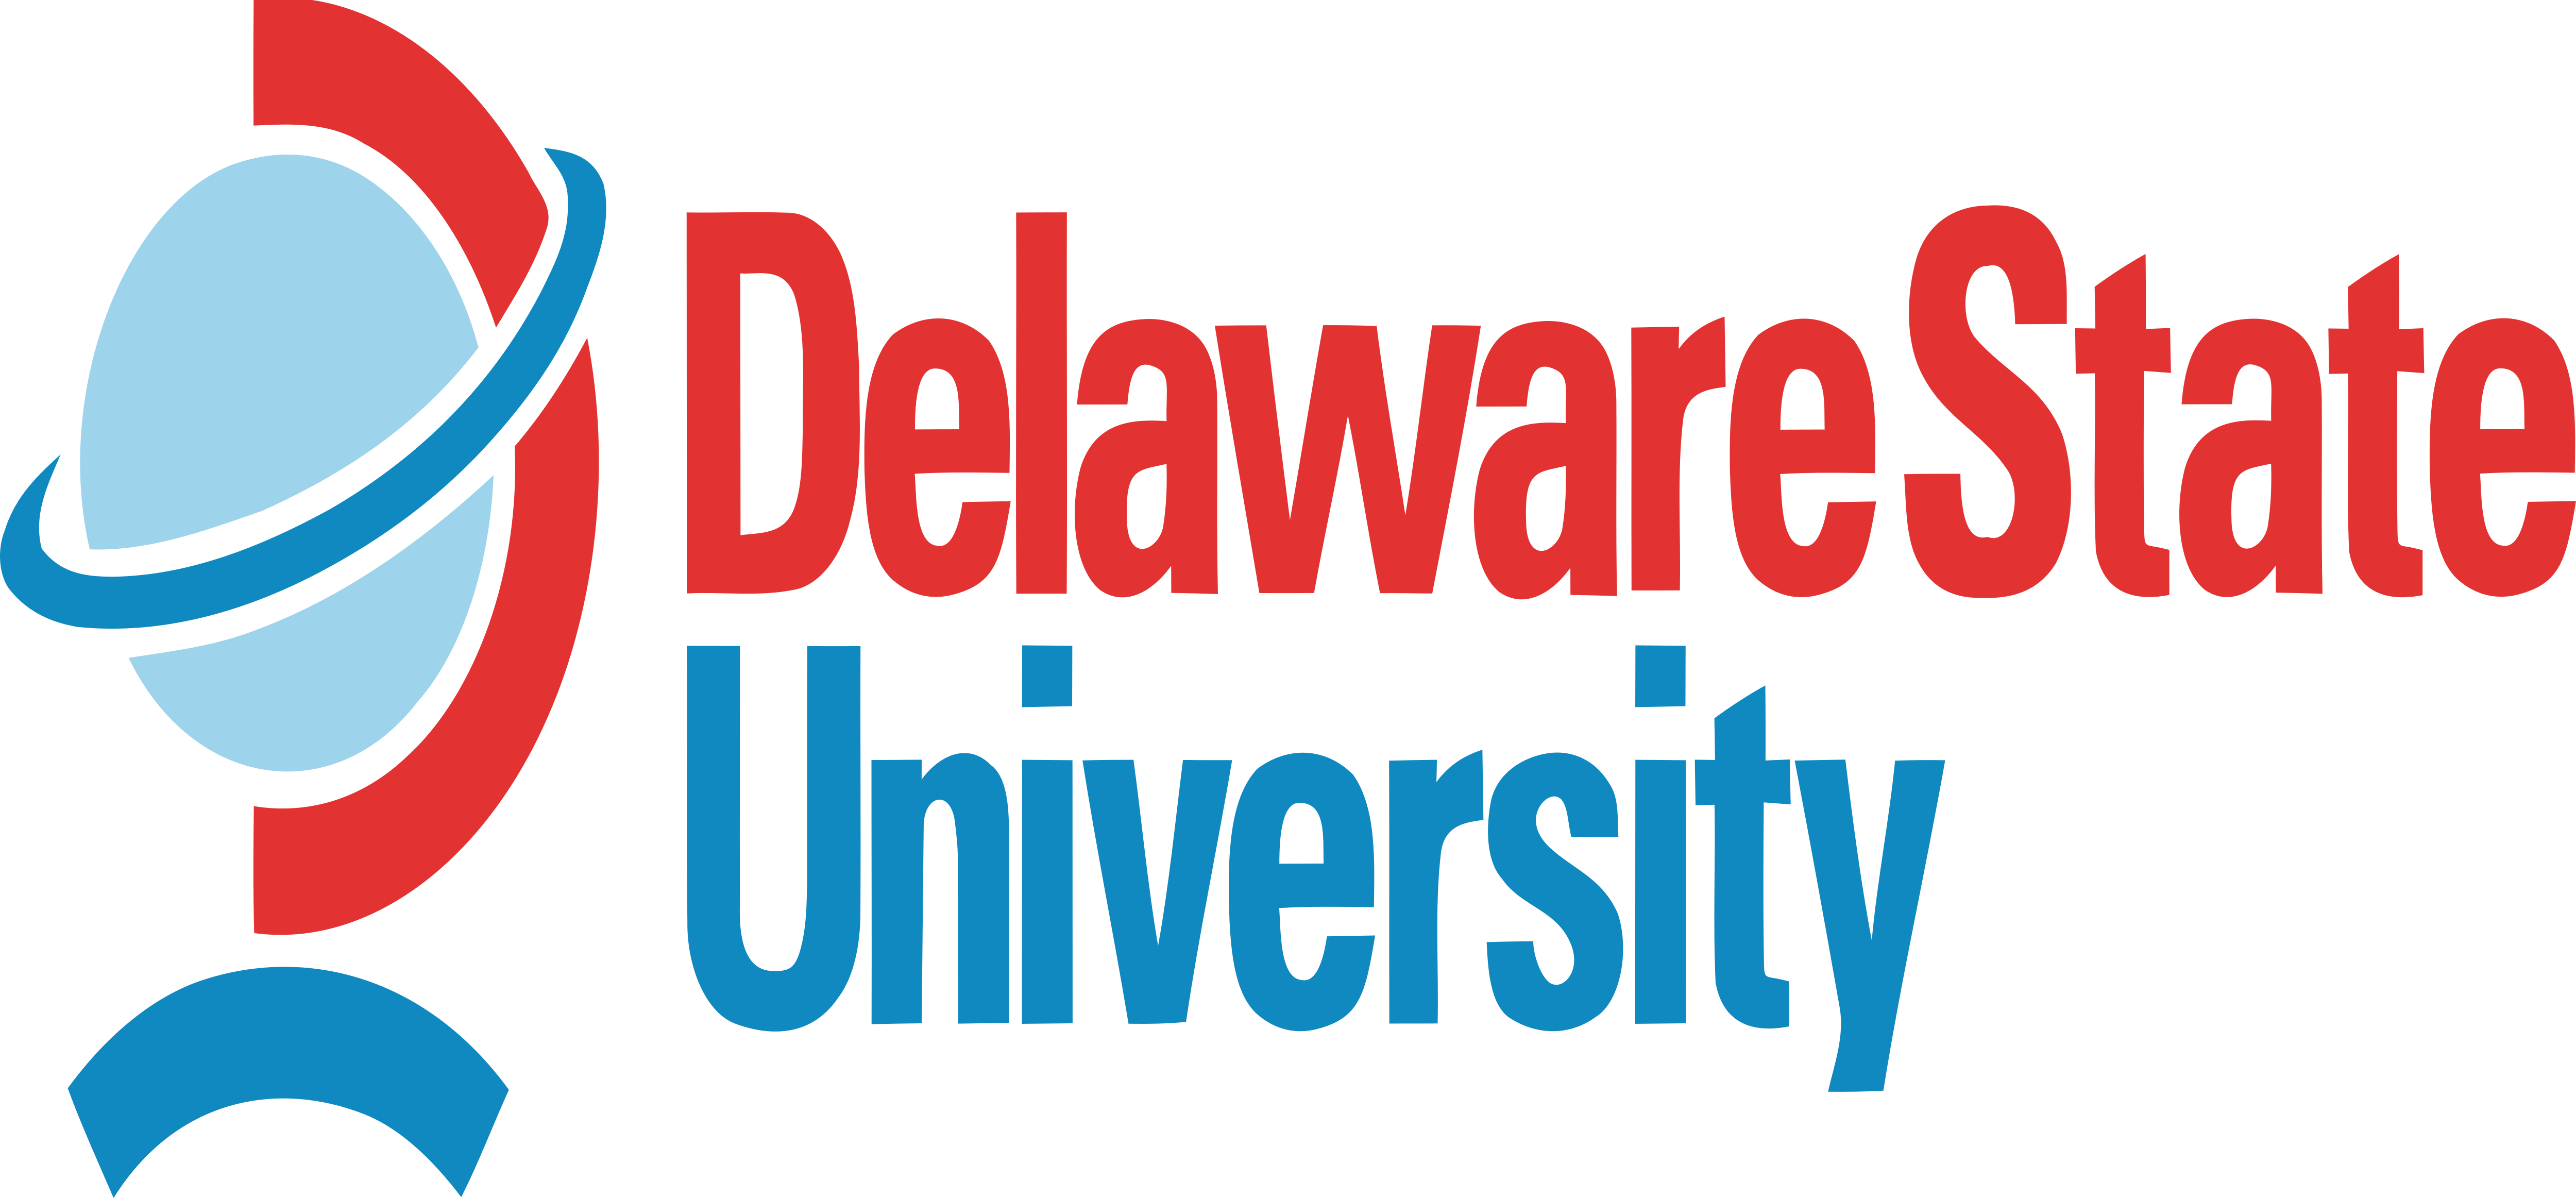 Delaware State University. Ивент Юниверсити лого. Kit университет лого. ОШМУ университет лого. De state